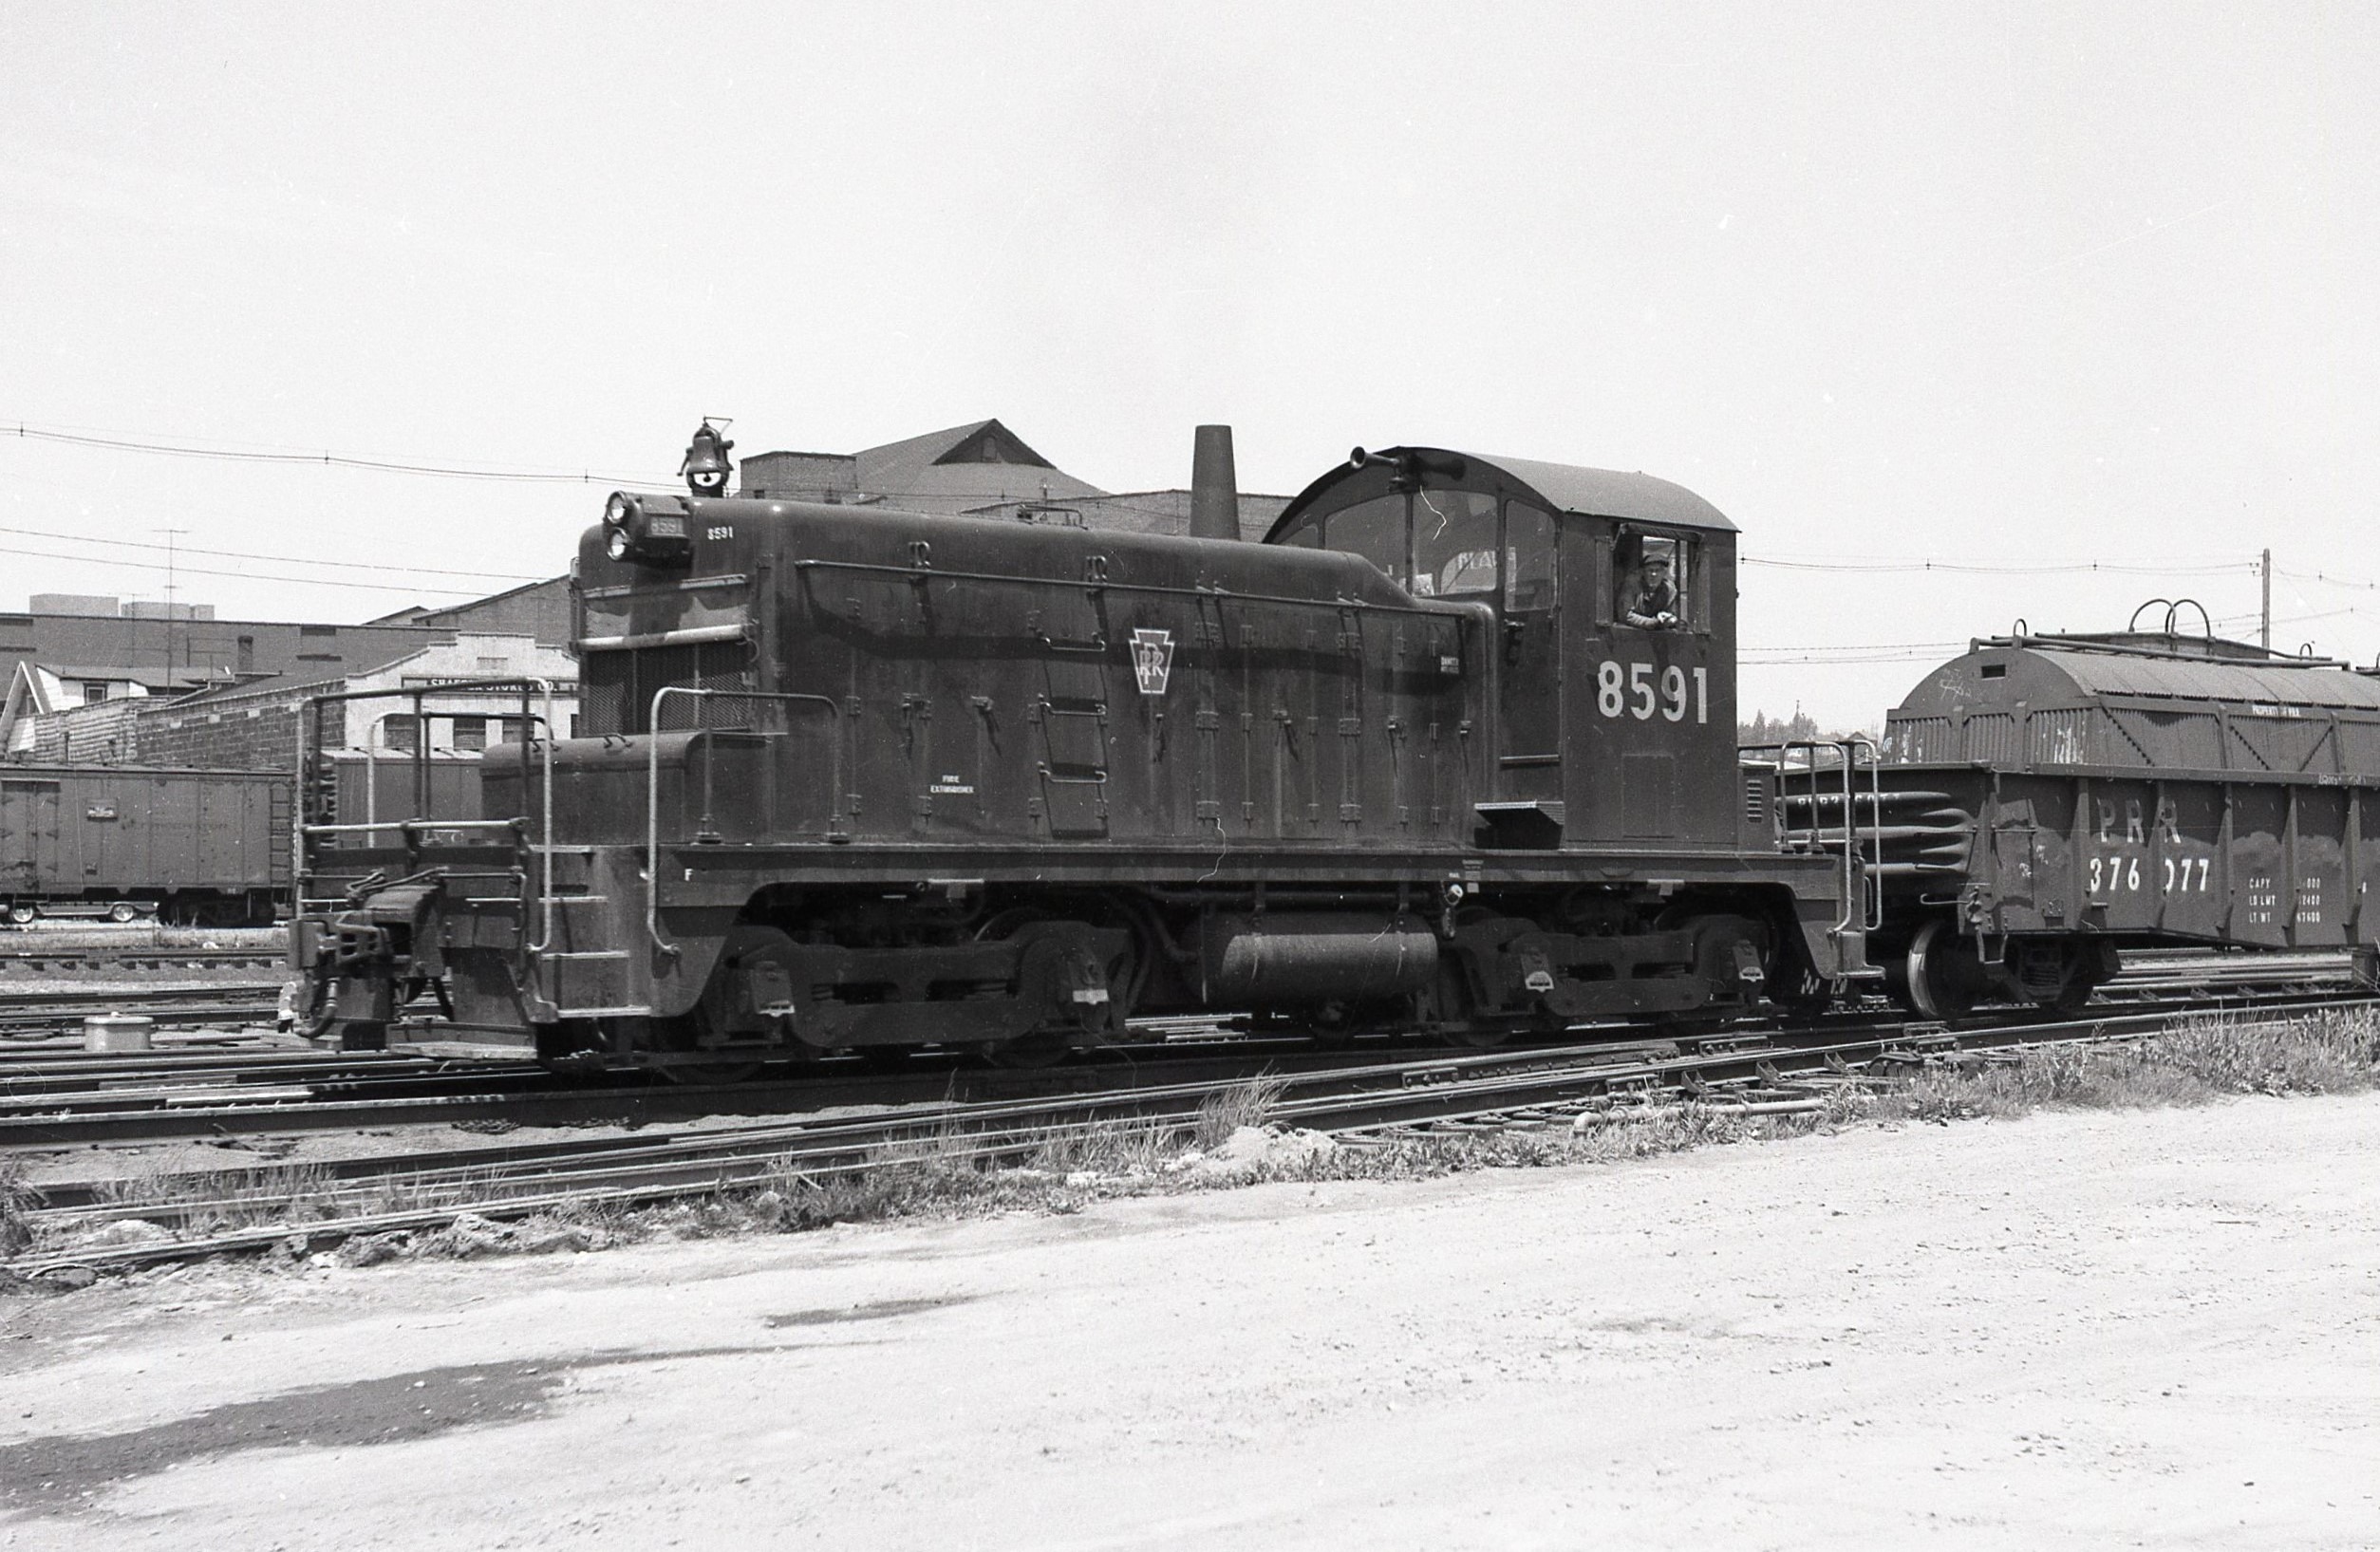 Pennsylvania Railroad | Altoona, Pa. | EMD SW1 8591 diesel-electric locomotive | 1966 | Elmer Kremkow photo